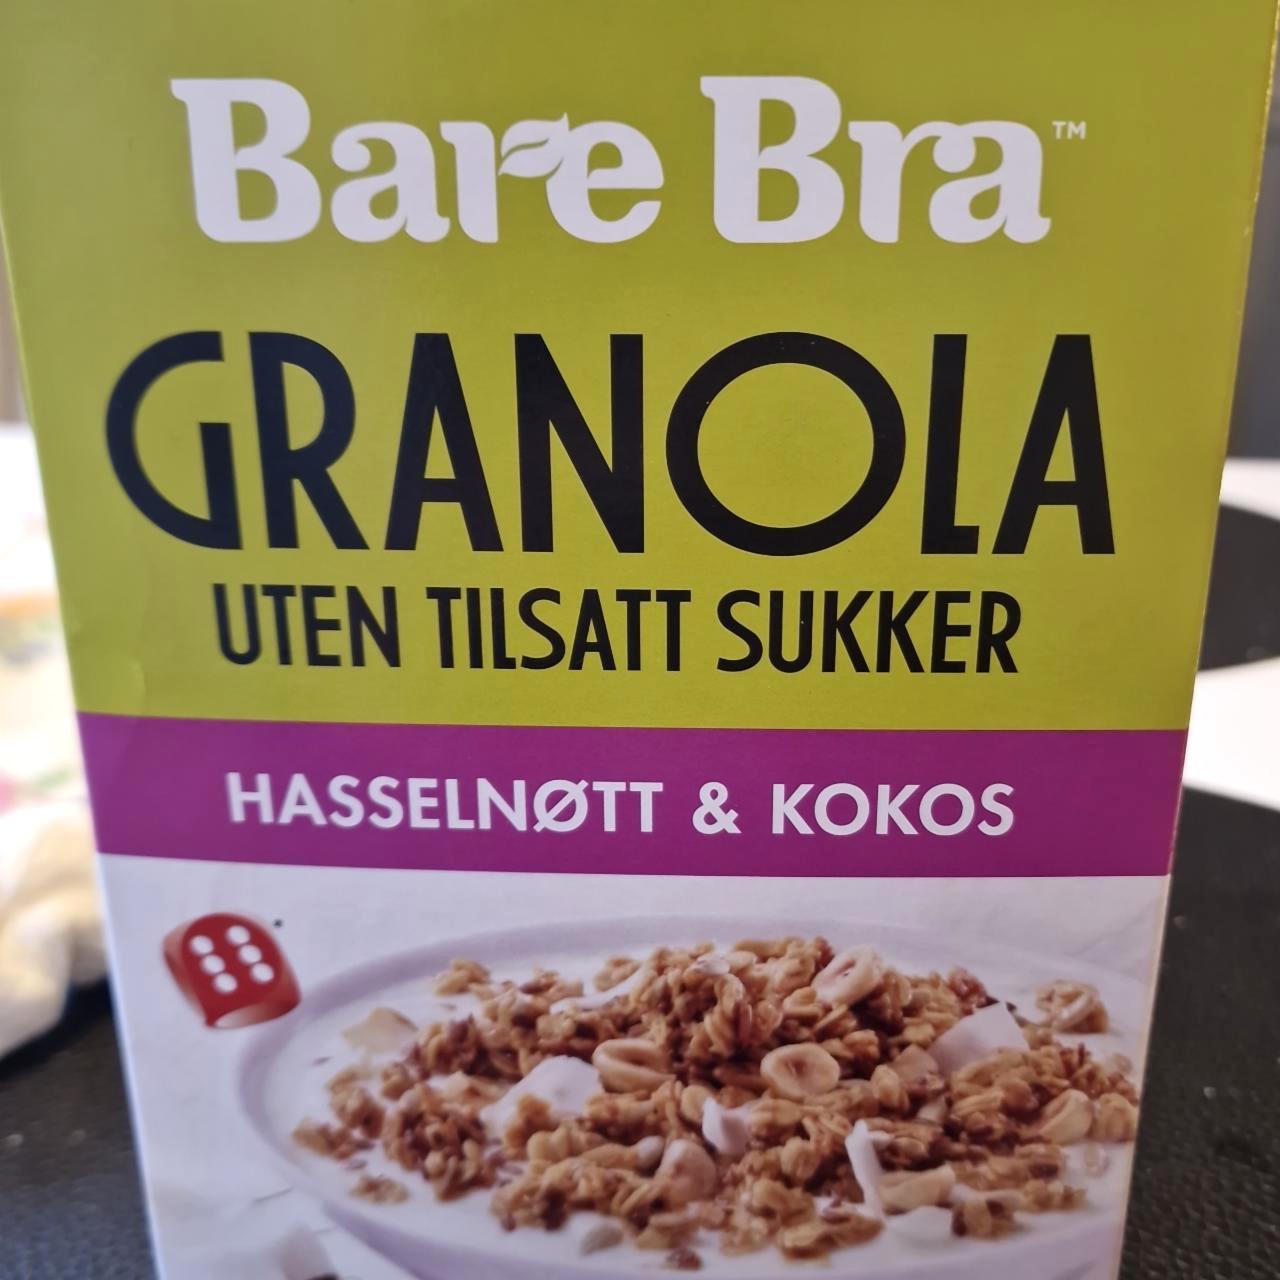 Képek - Granola hassalnøtt & kokos Bare Bra